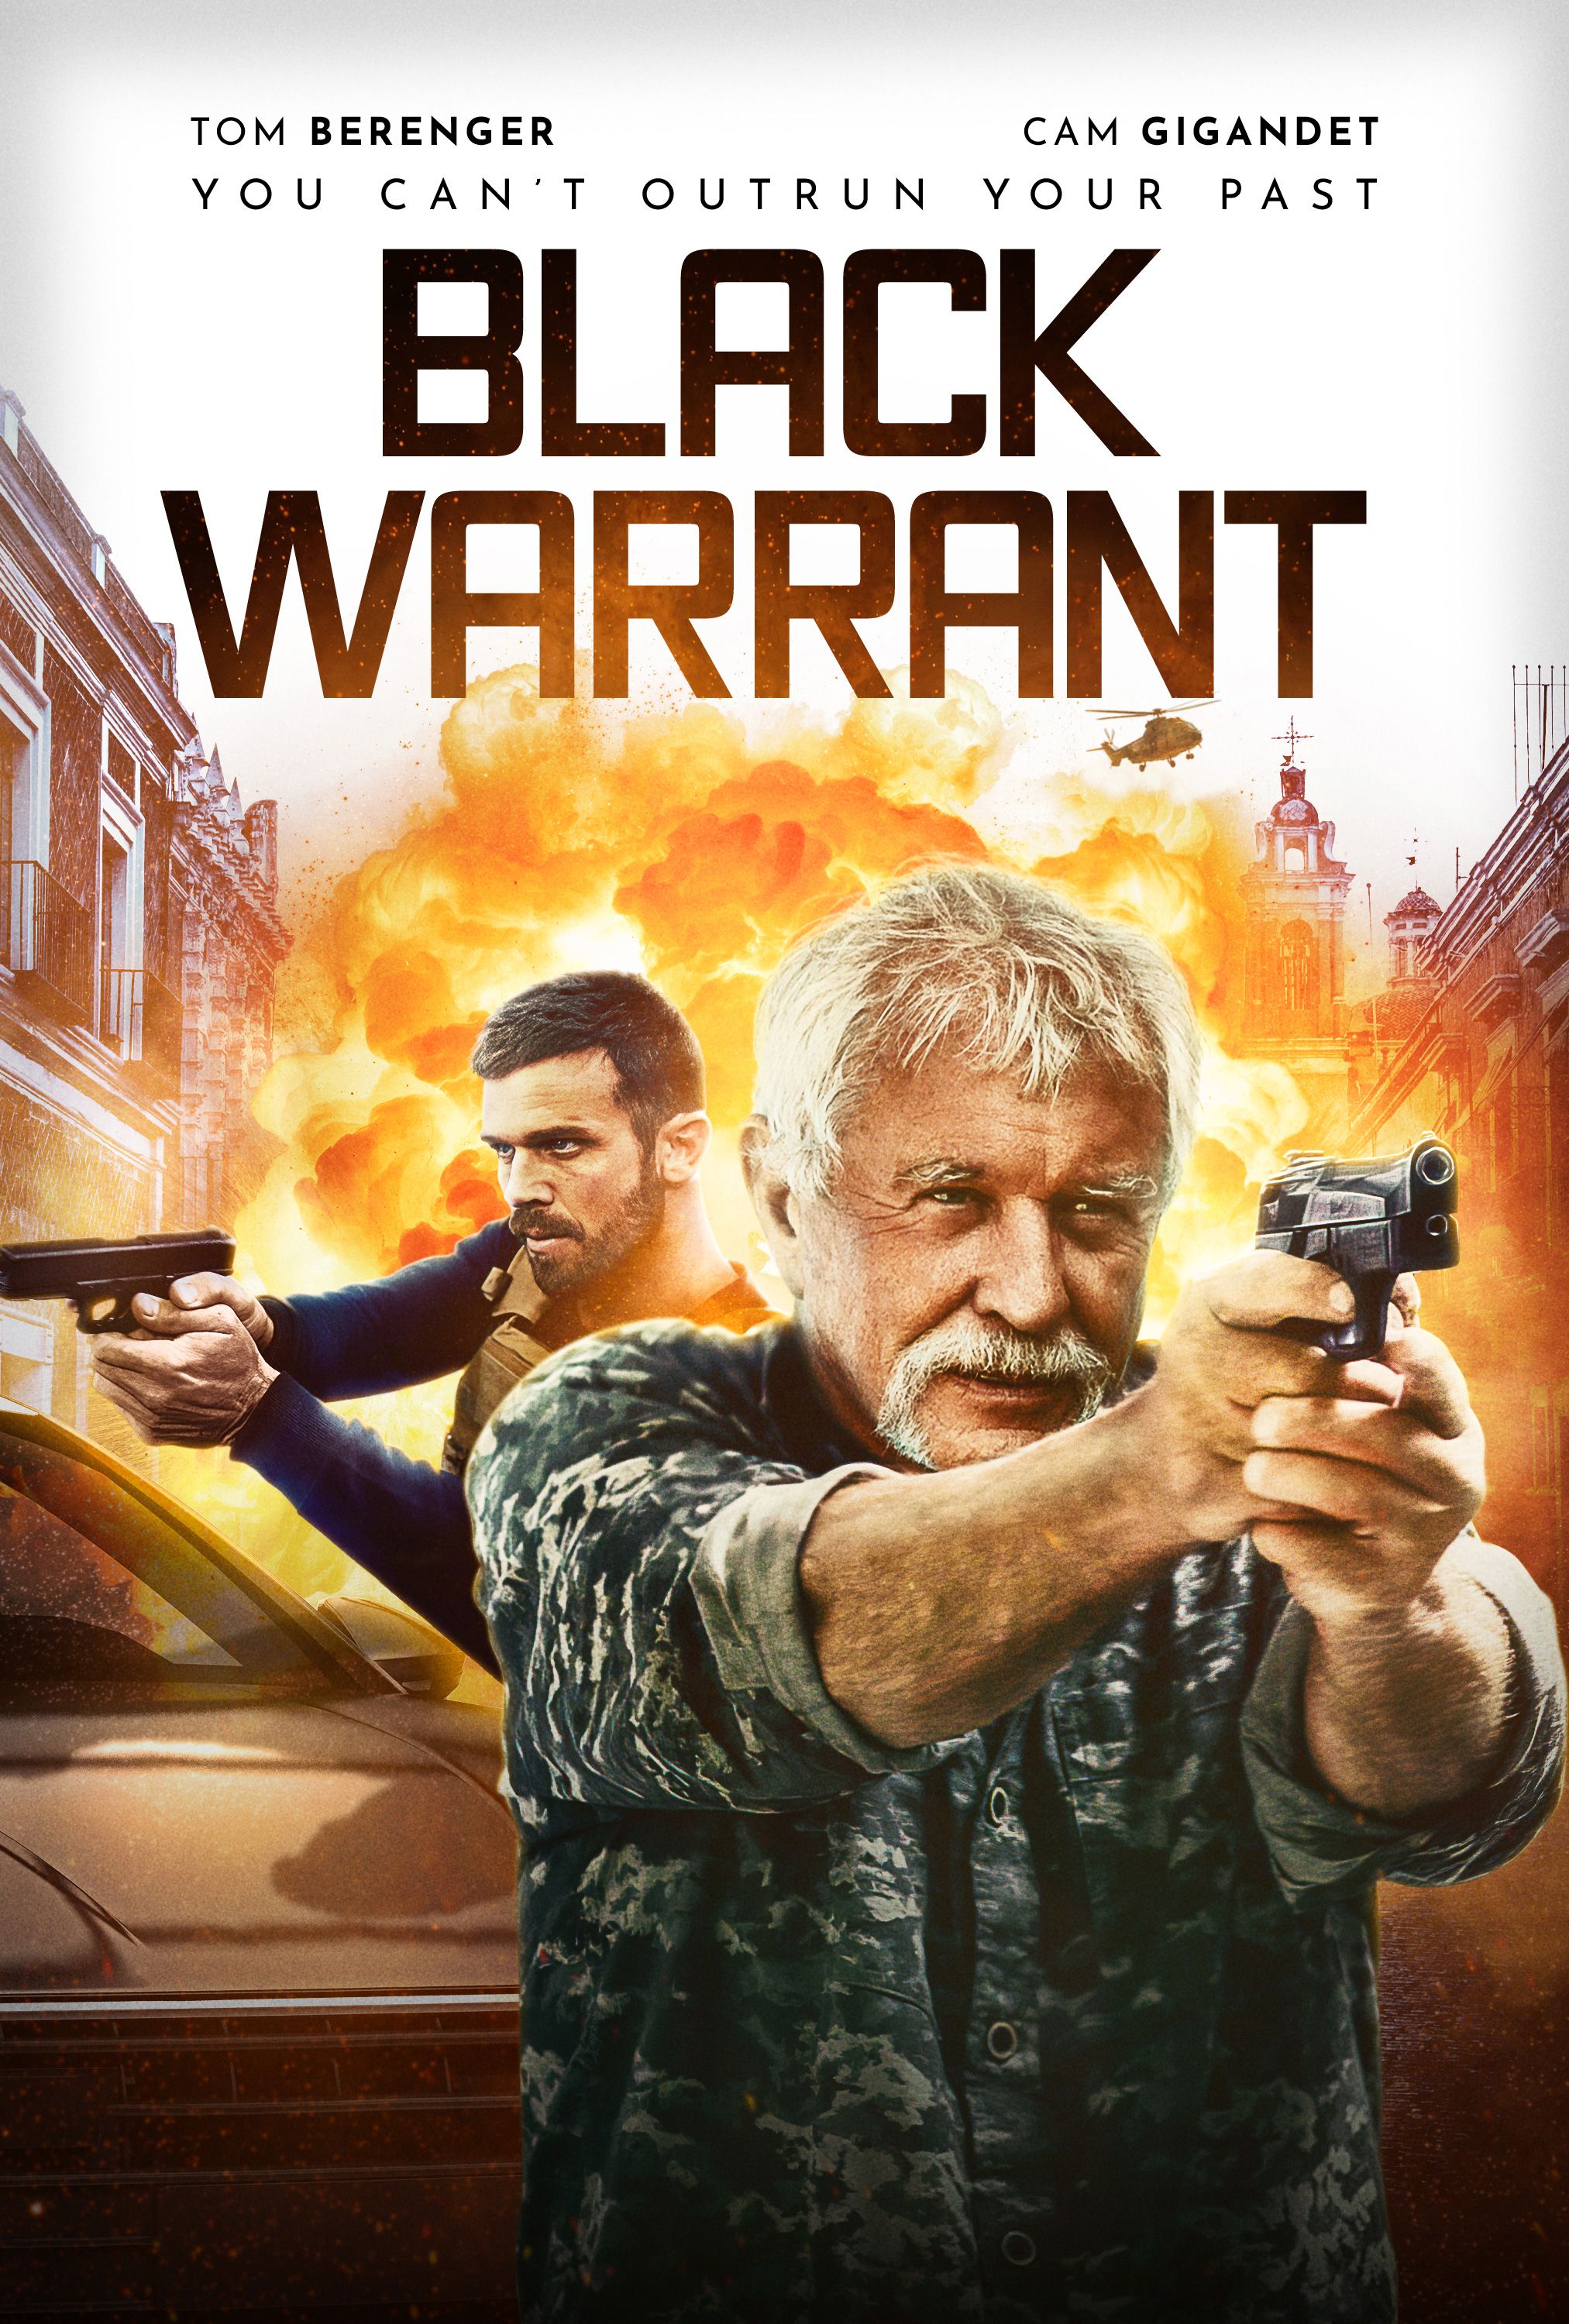 Cam Gigandet & Tom Berenger Fight Cyberterrorism in Black Warrant Trailer